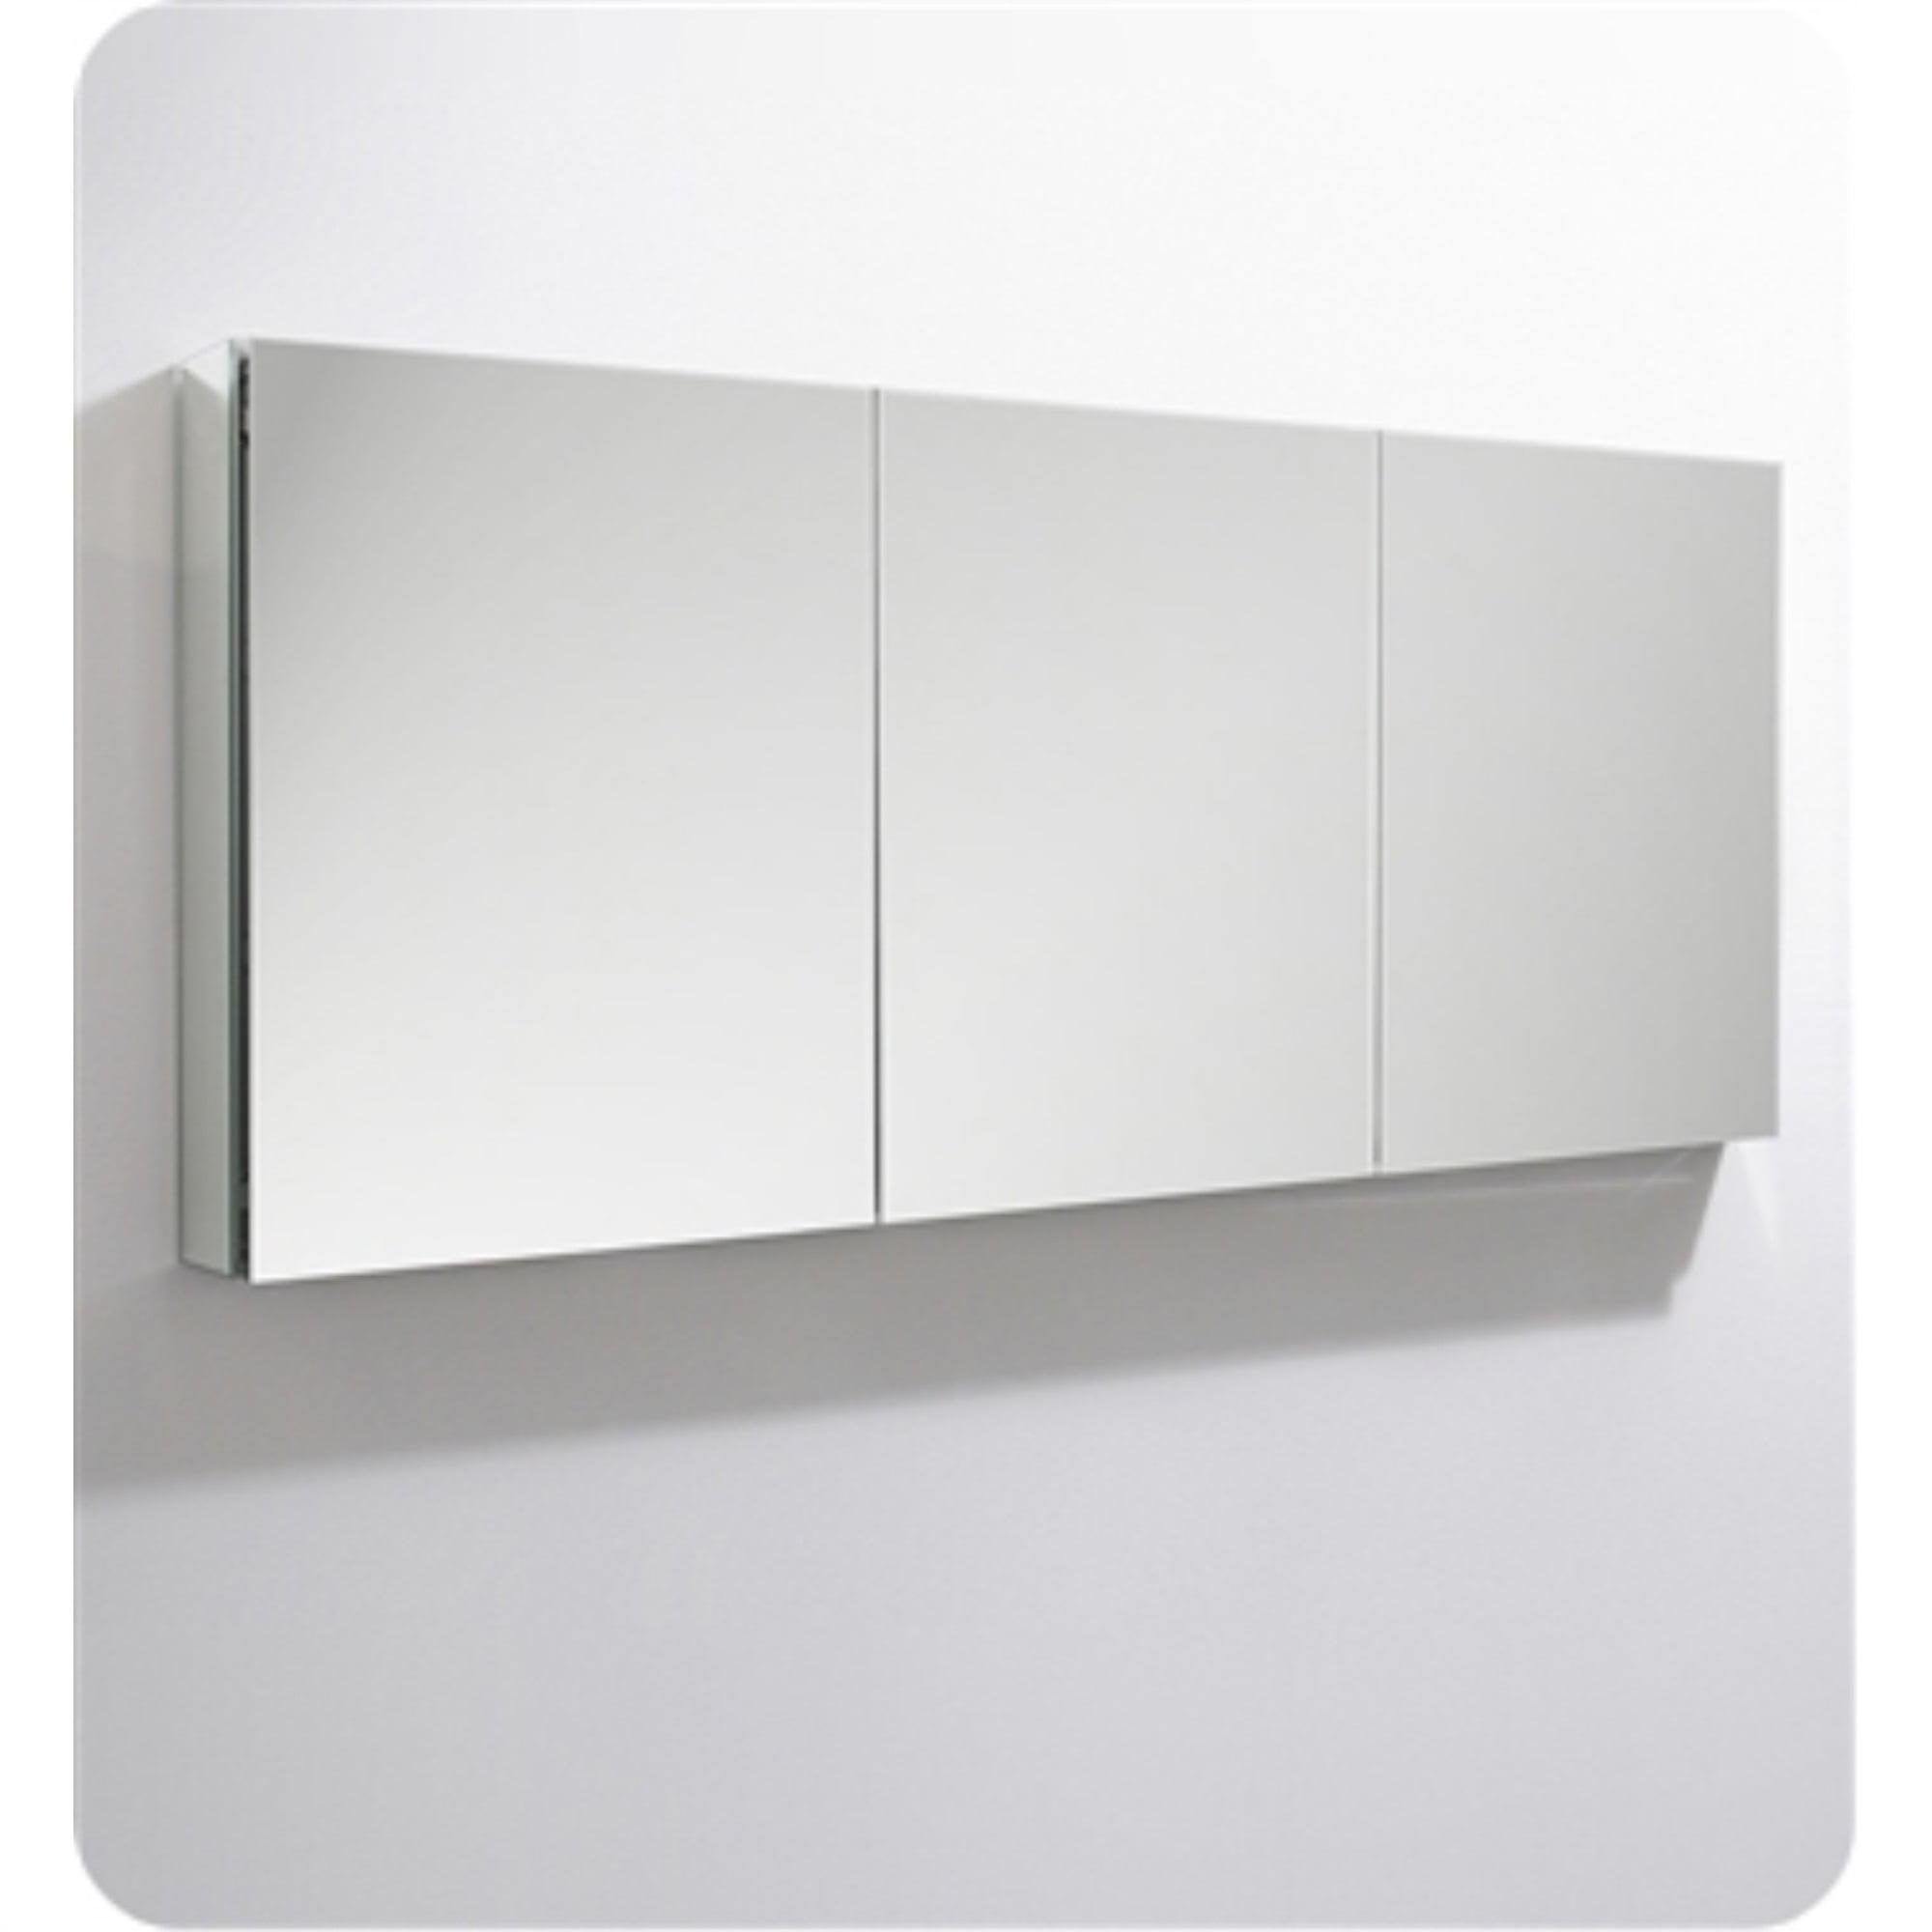 Modern 59" Wide Frameless Rectangular Bathroom Medicine Cabinet with Mirrored Finish